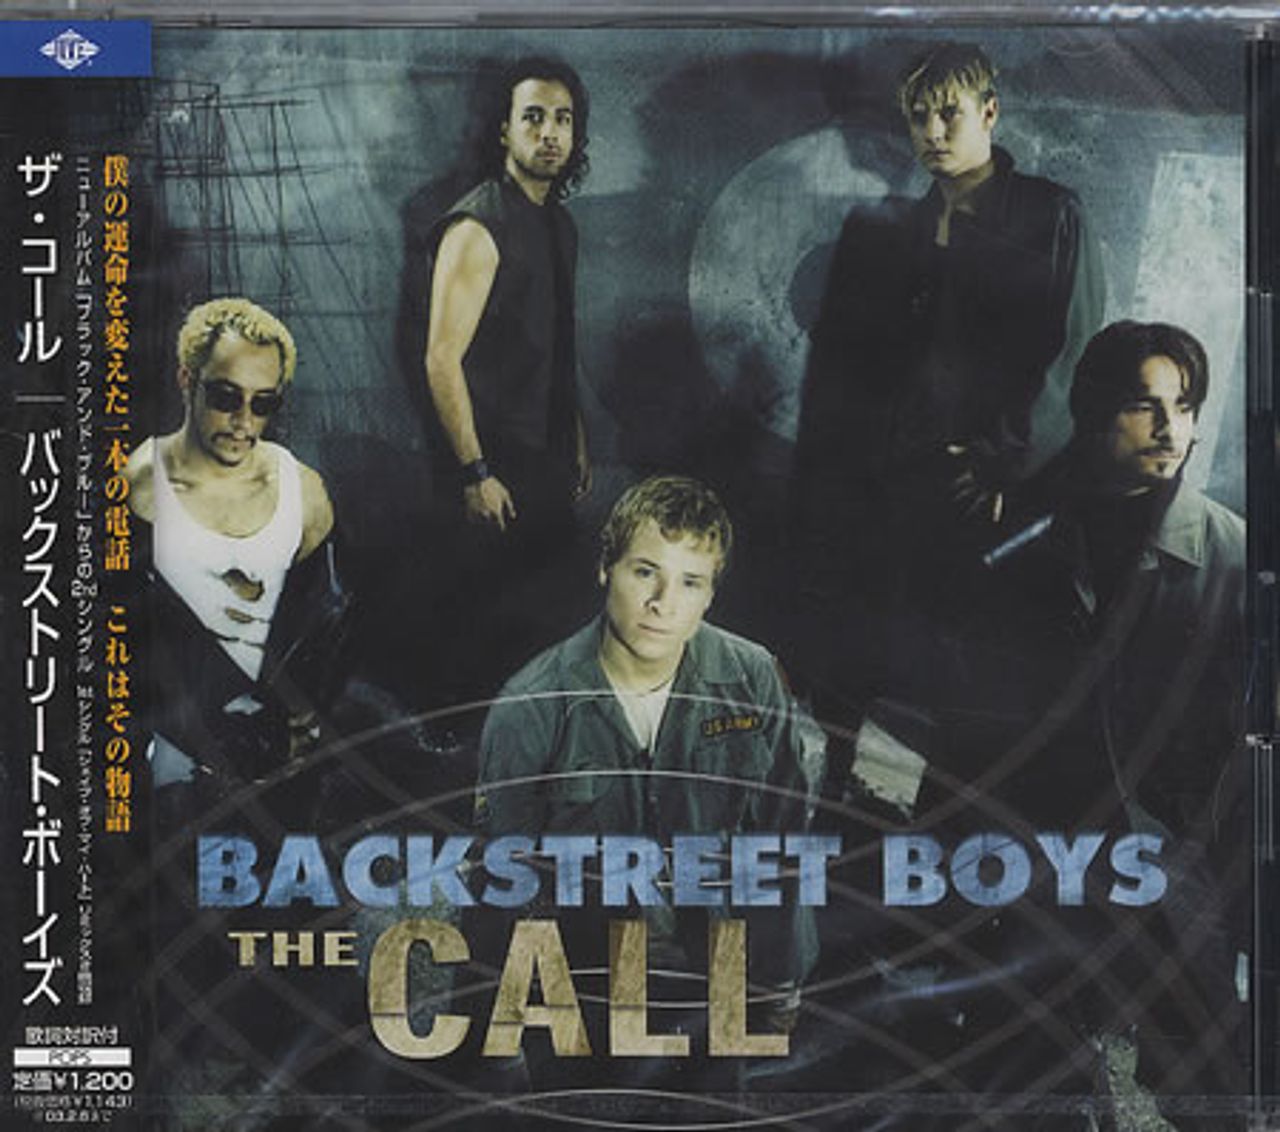 Backstreet Boys The Call Japanese Promo CD single